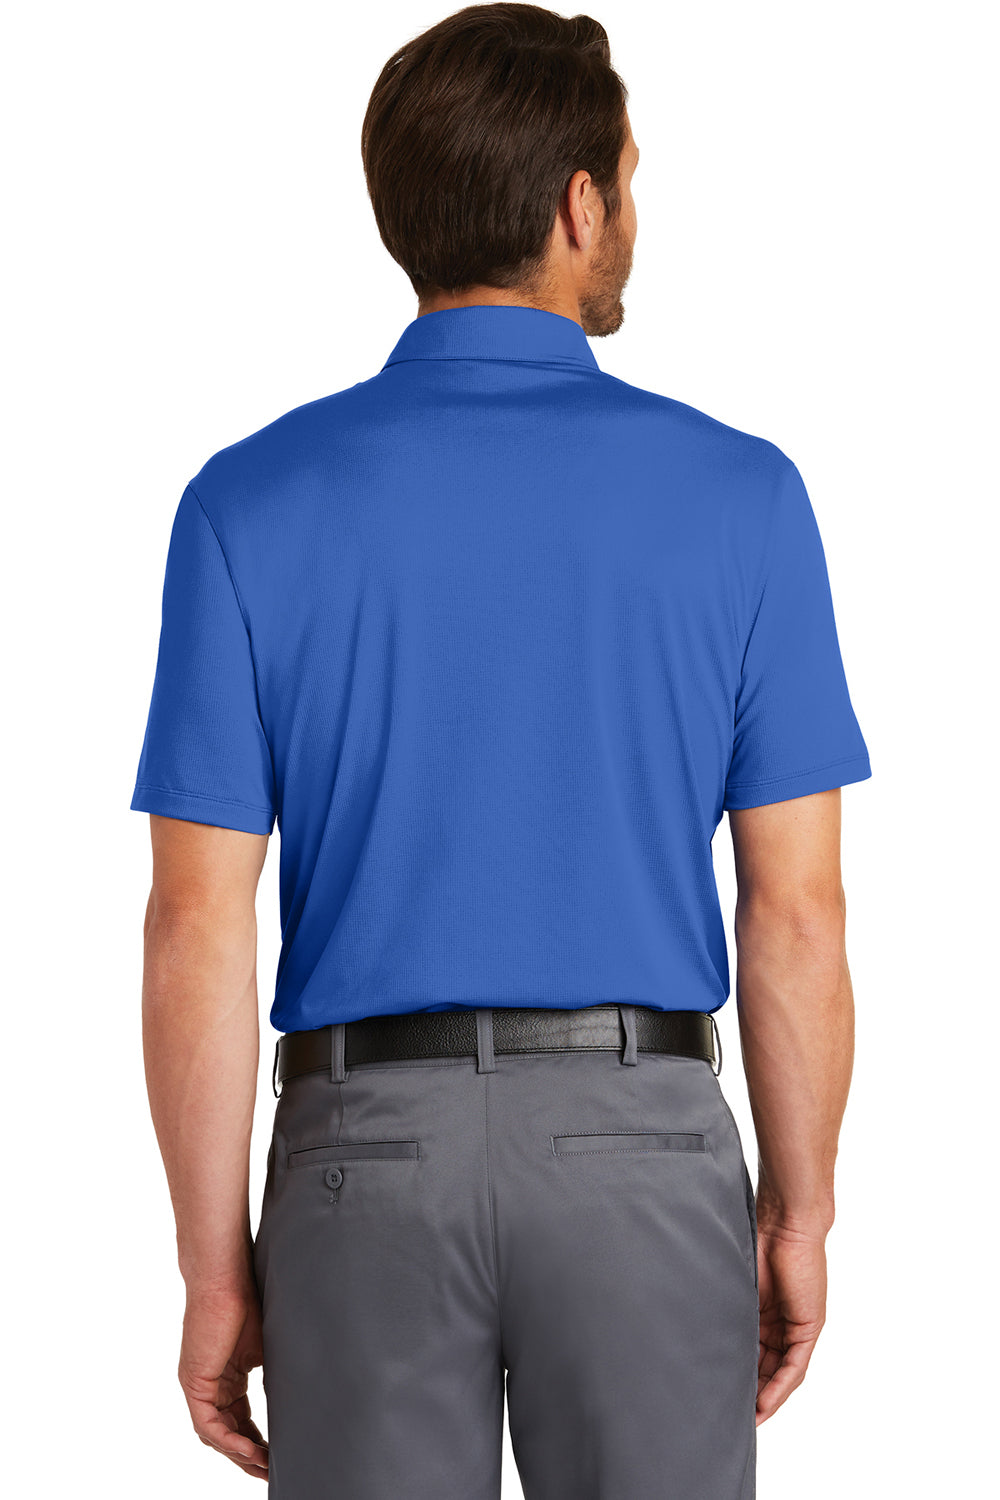 Nike 883681 Mens Legacy Dri-Fit Moisture Wicking Short Sleeve Polo Shirt Game Royal Blue Model Back